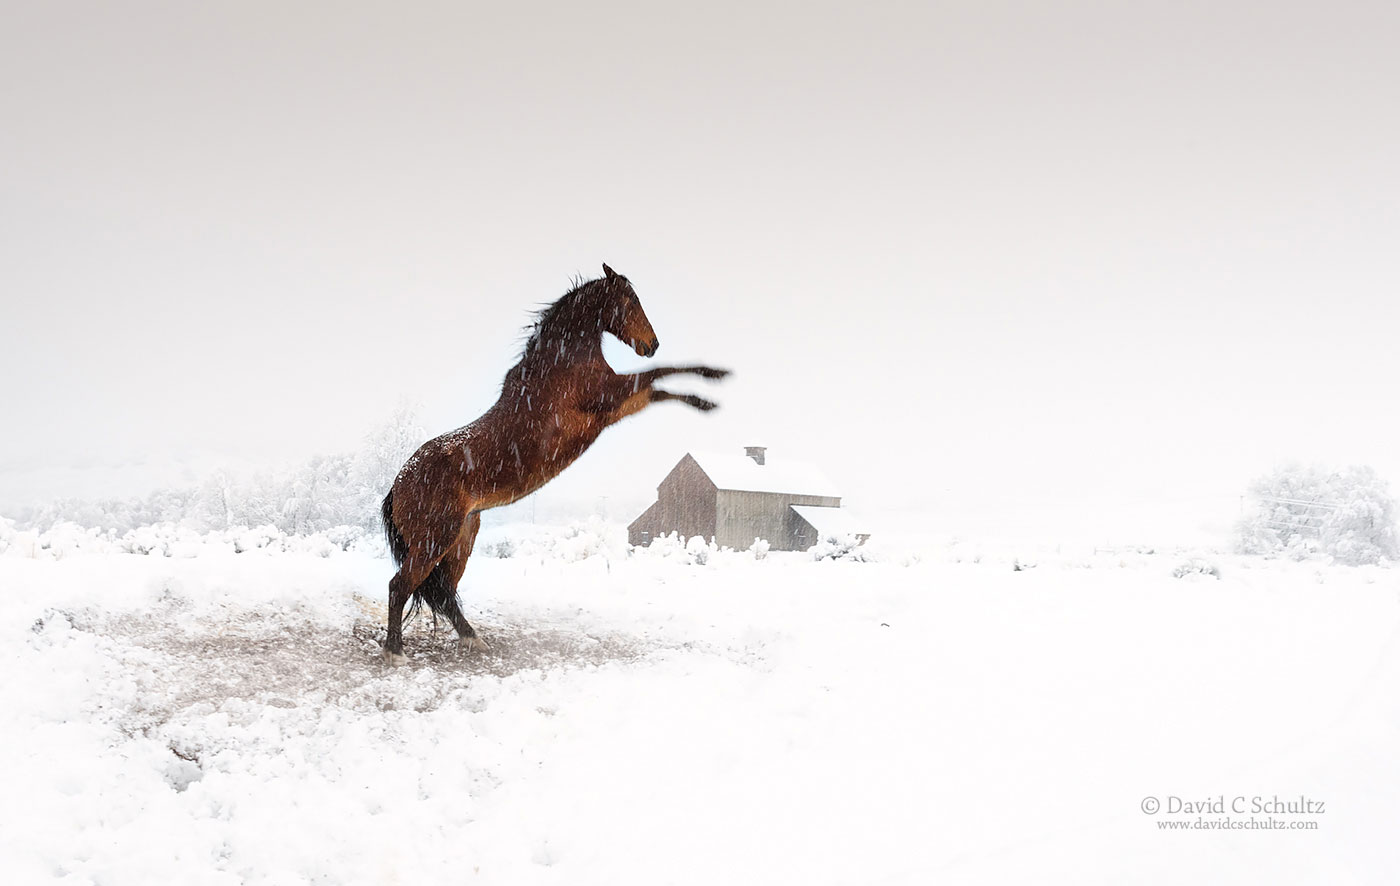 Horse and the Tate Barn Utah - Image #47-3154